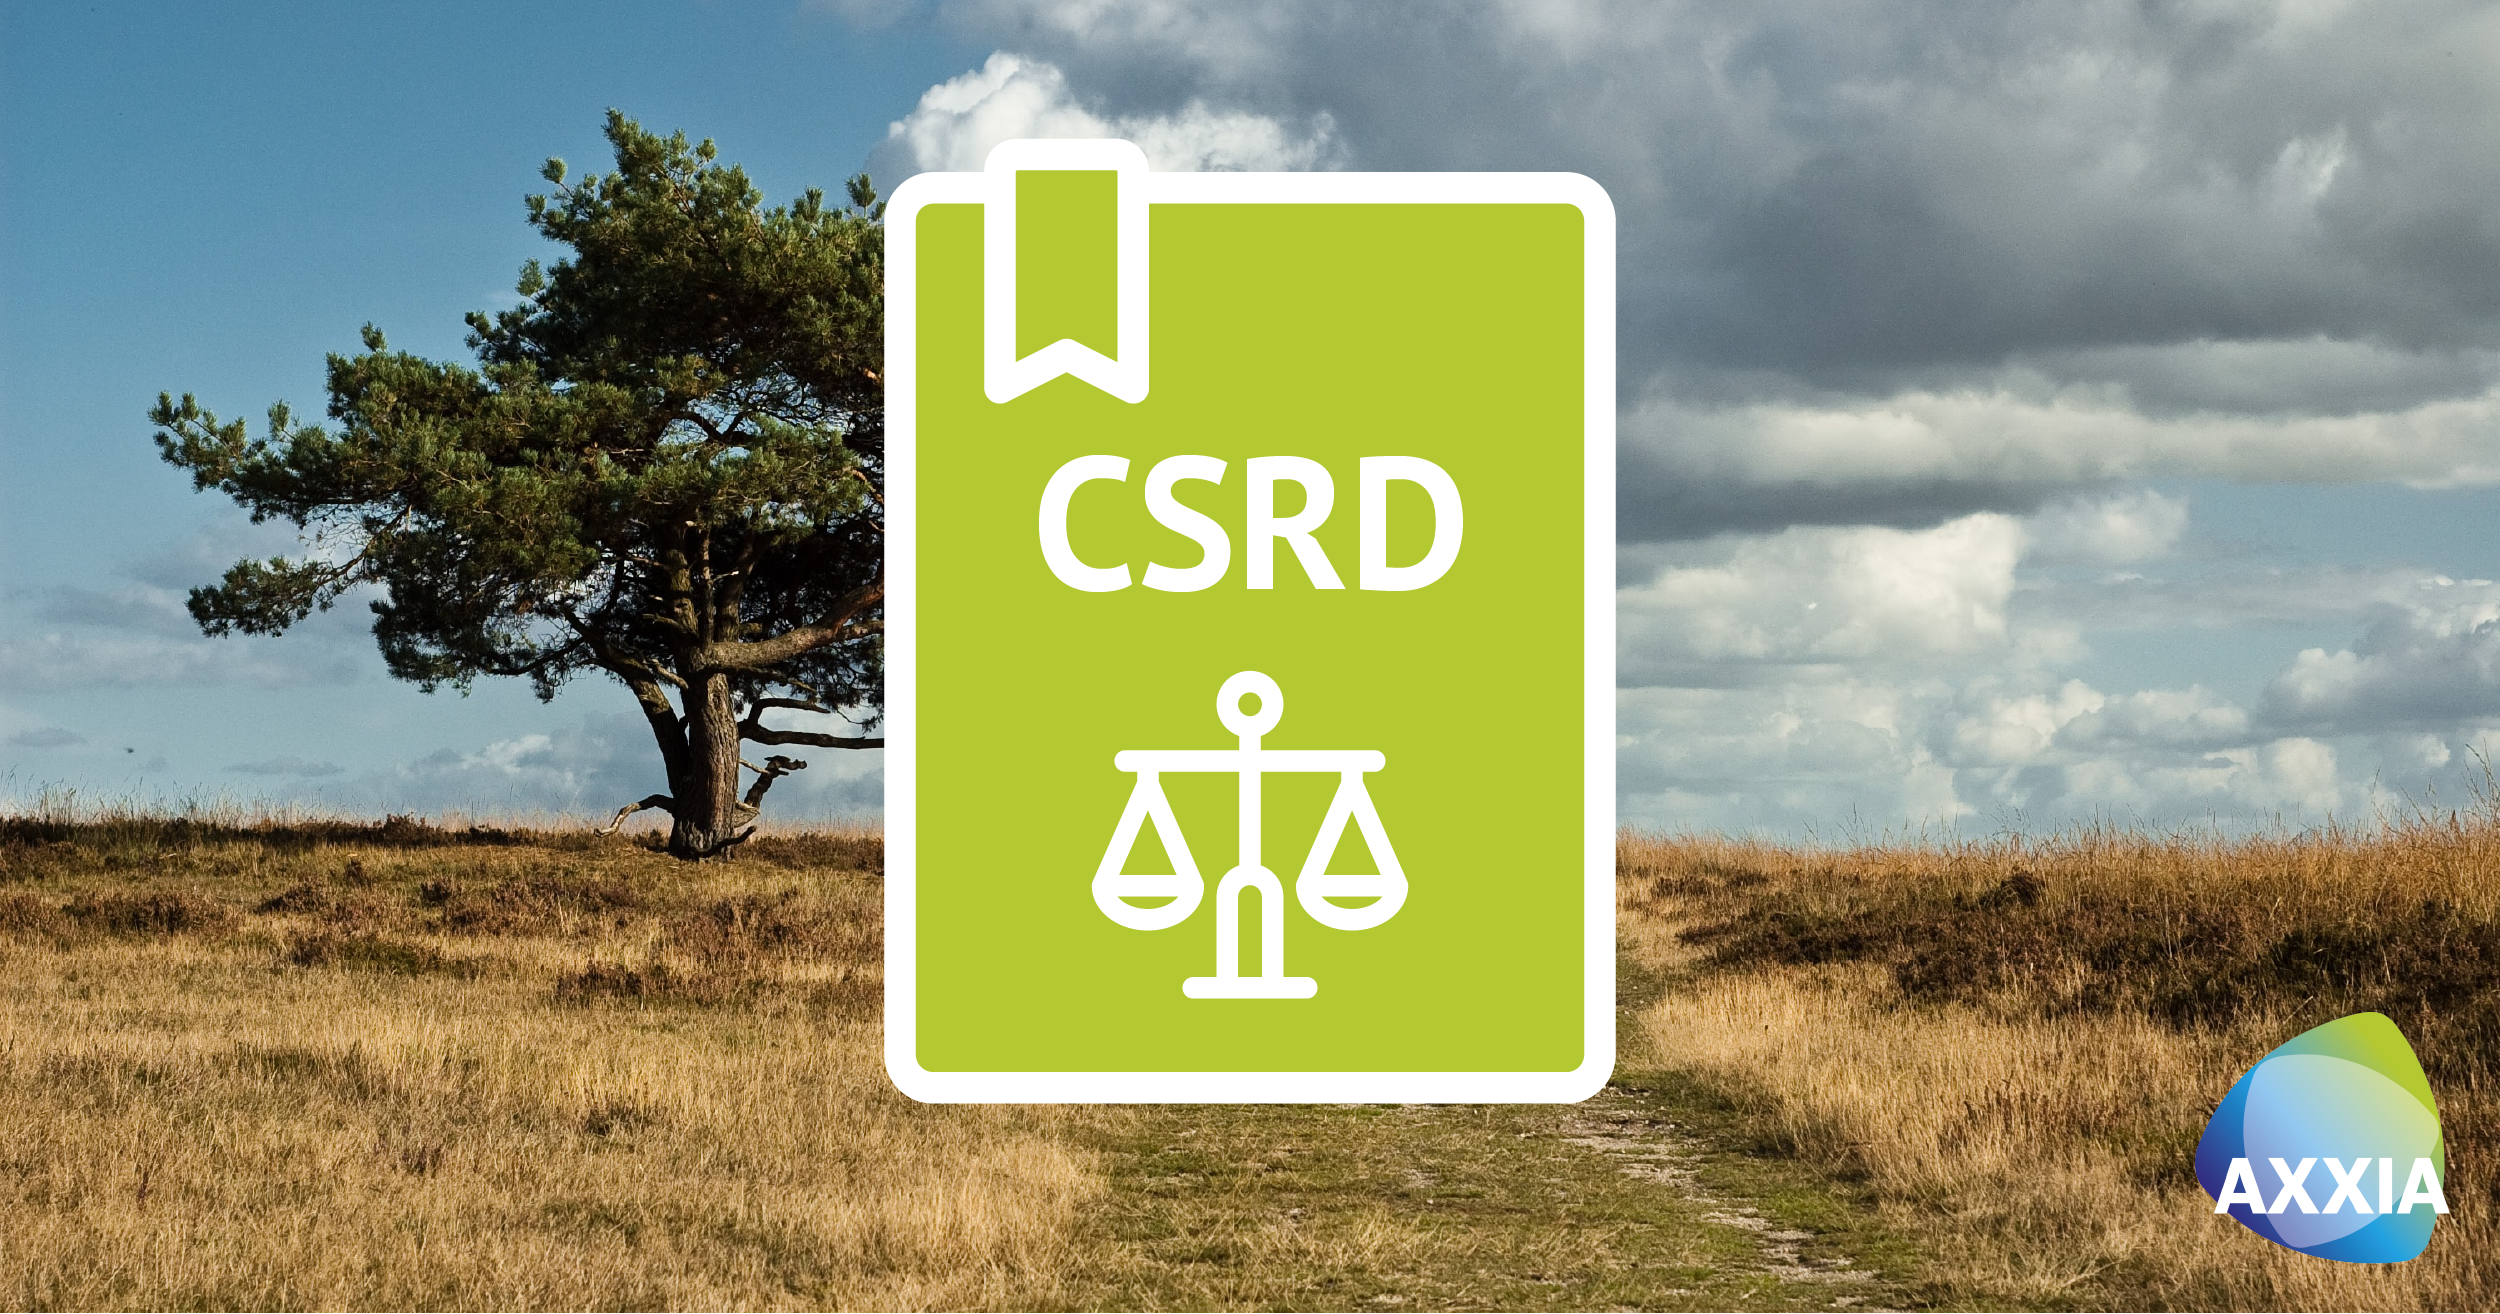 Uitstel van CSRD wetgeving